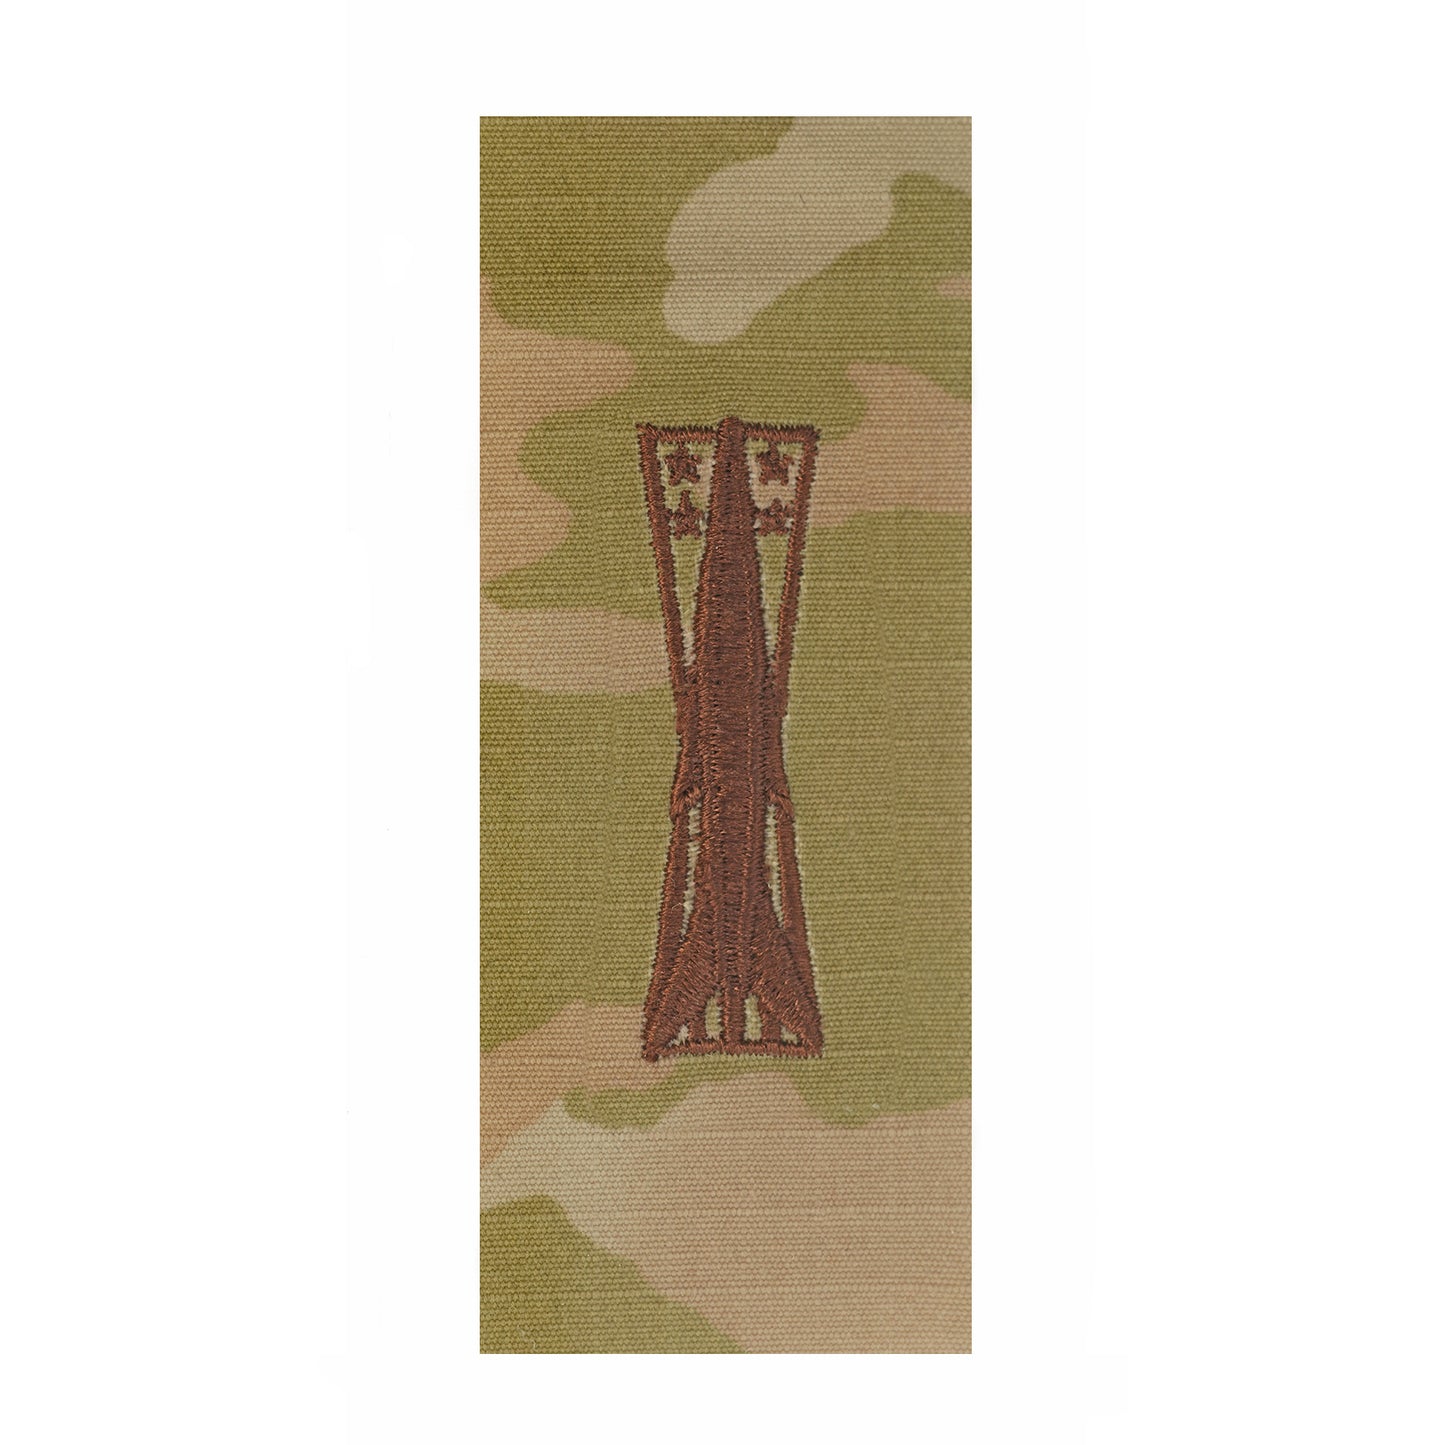 U.S. Air Force Missileman (Basic) OCP Spice Brown Badge